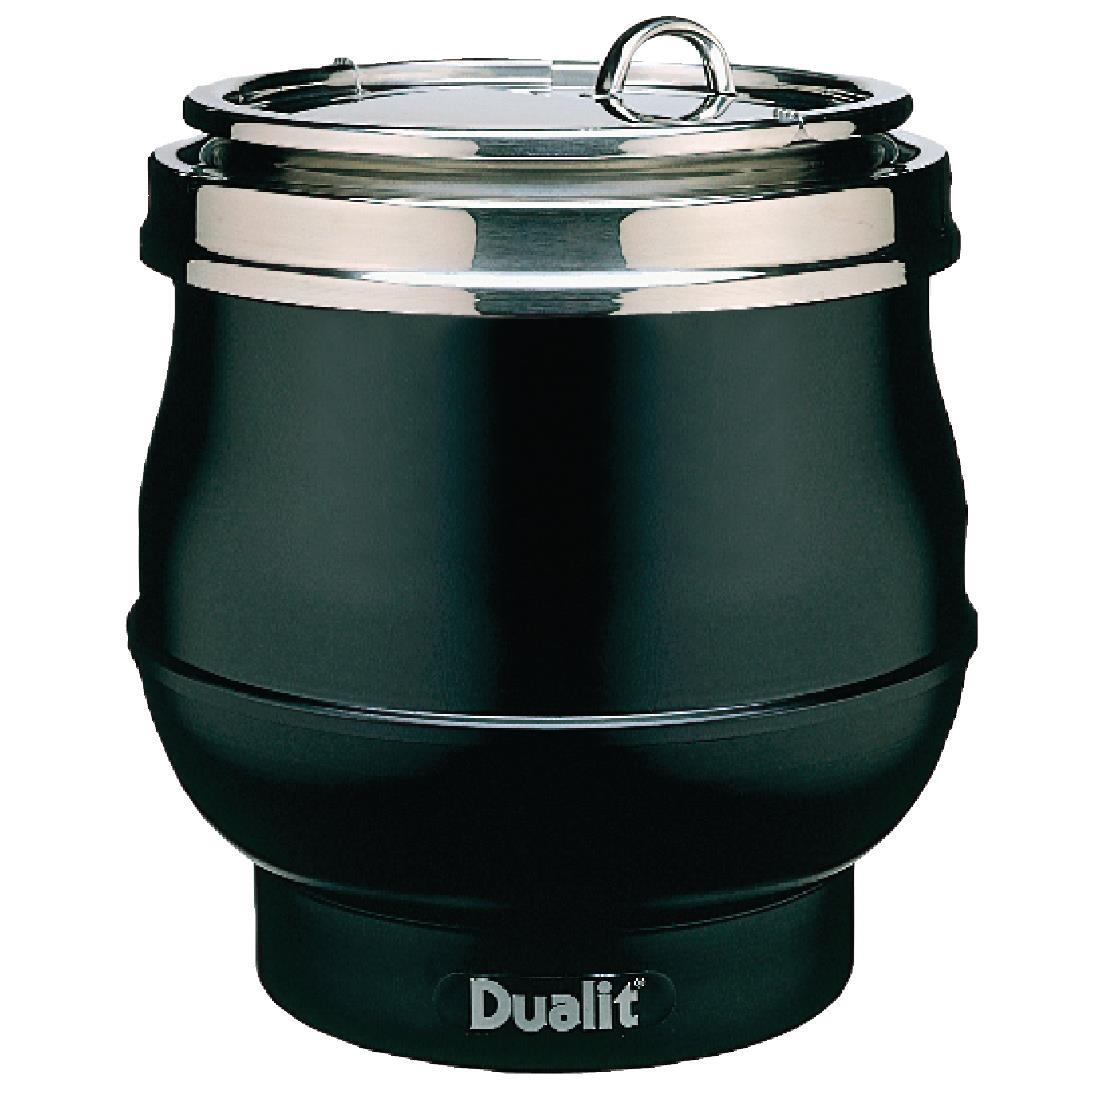 Dualit Hotpot Soup Kettle Satin Black 70012 - J467  - 1